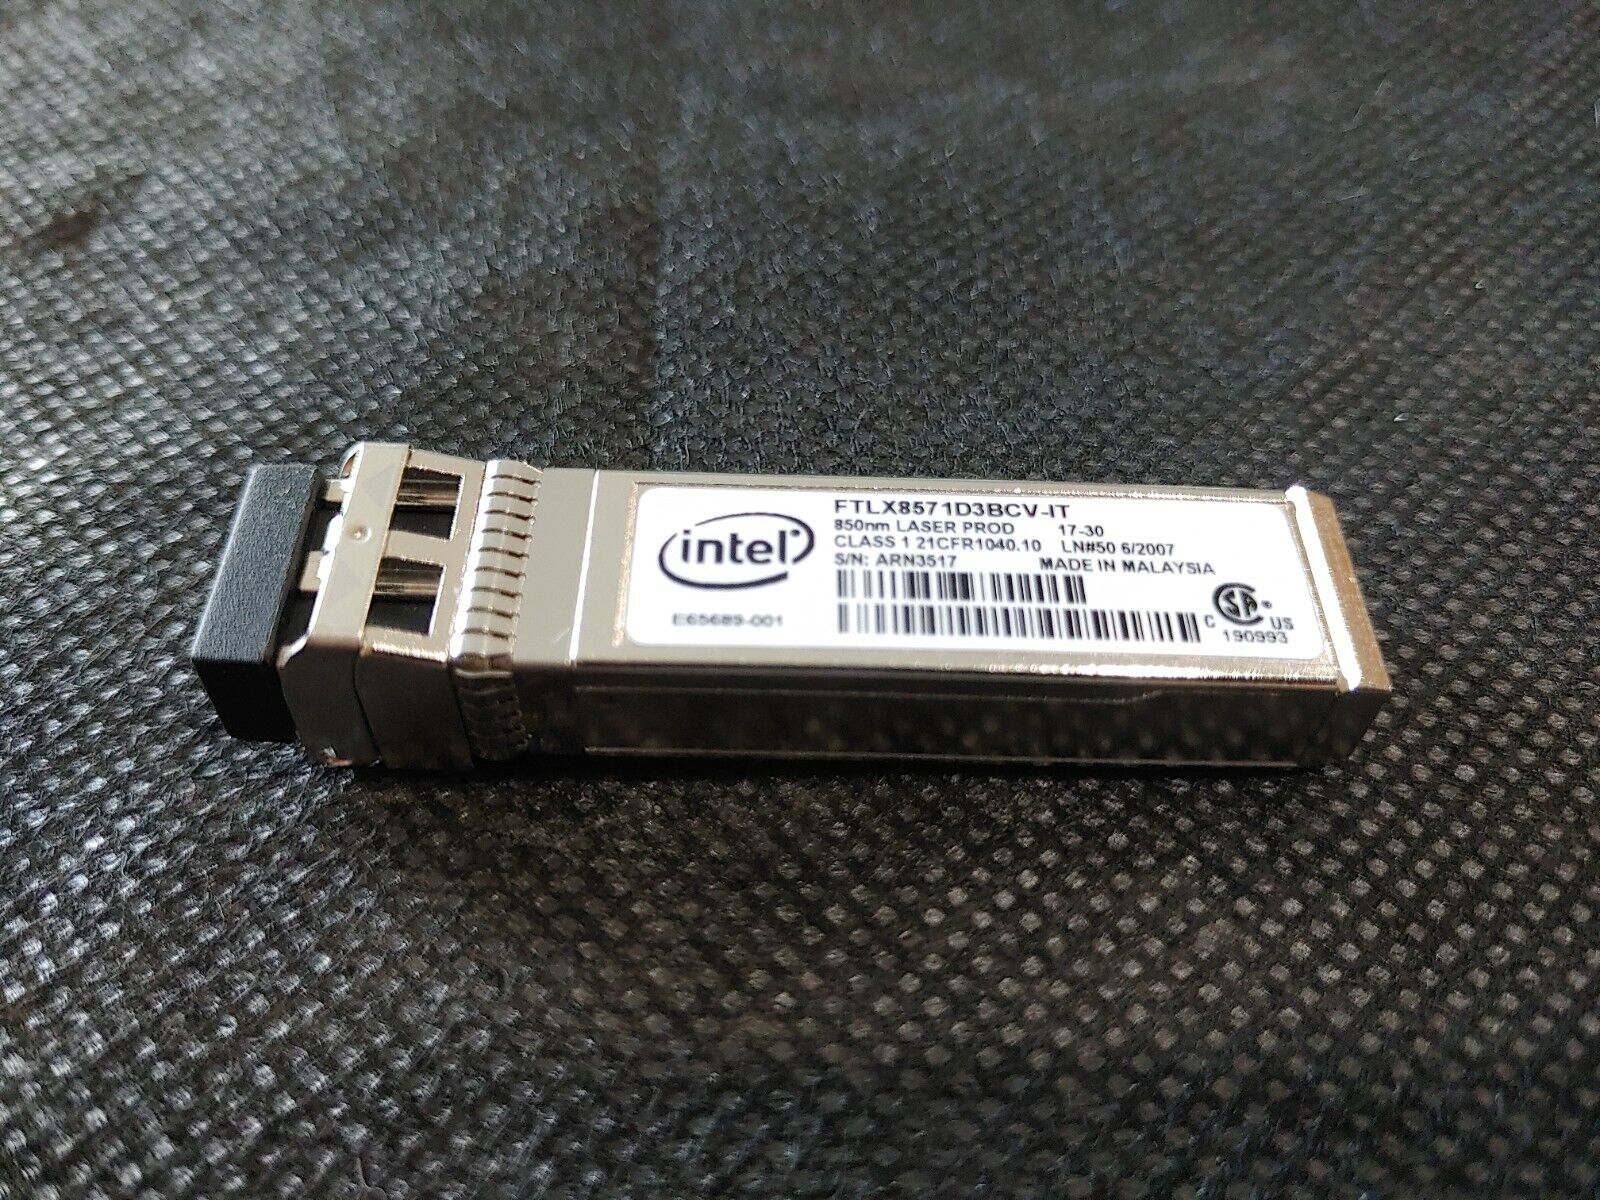 Intel 10Gb Fiber Transceiver (FTLX8571D3BCV-IT) Network SFP